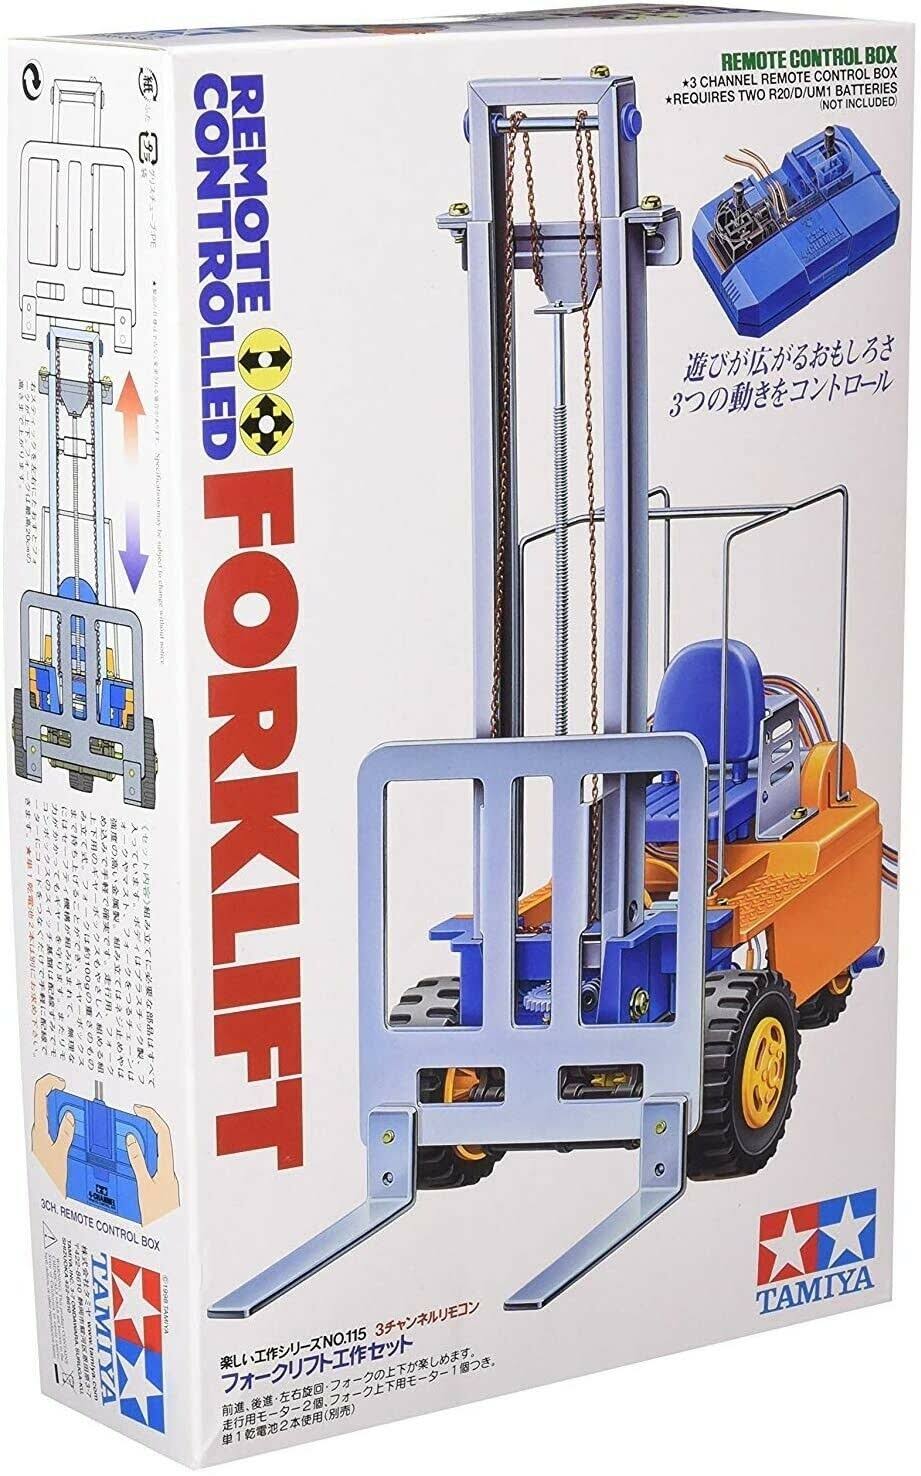 Tamiya 70115 Remote Controlled Forklift Toy Set